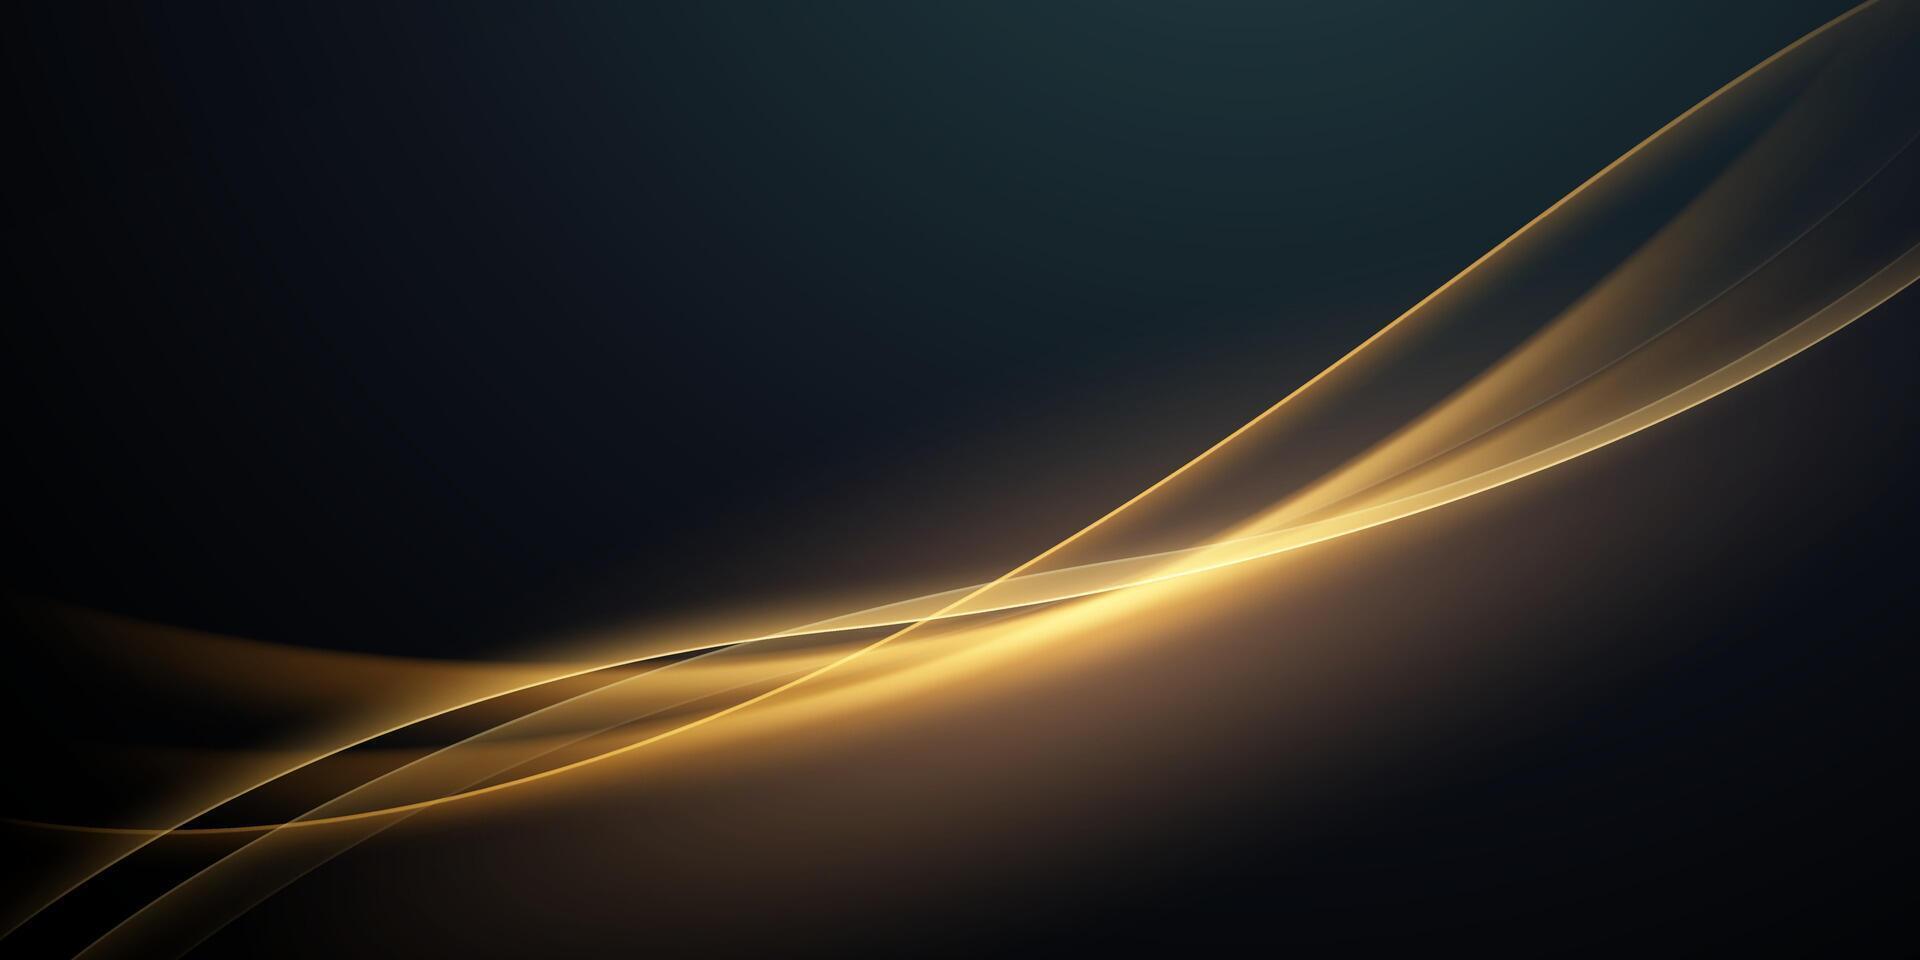 skön gyllene ljus rader bakgrund på svart bakgrund abstrakt design vektor illustration